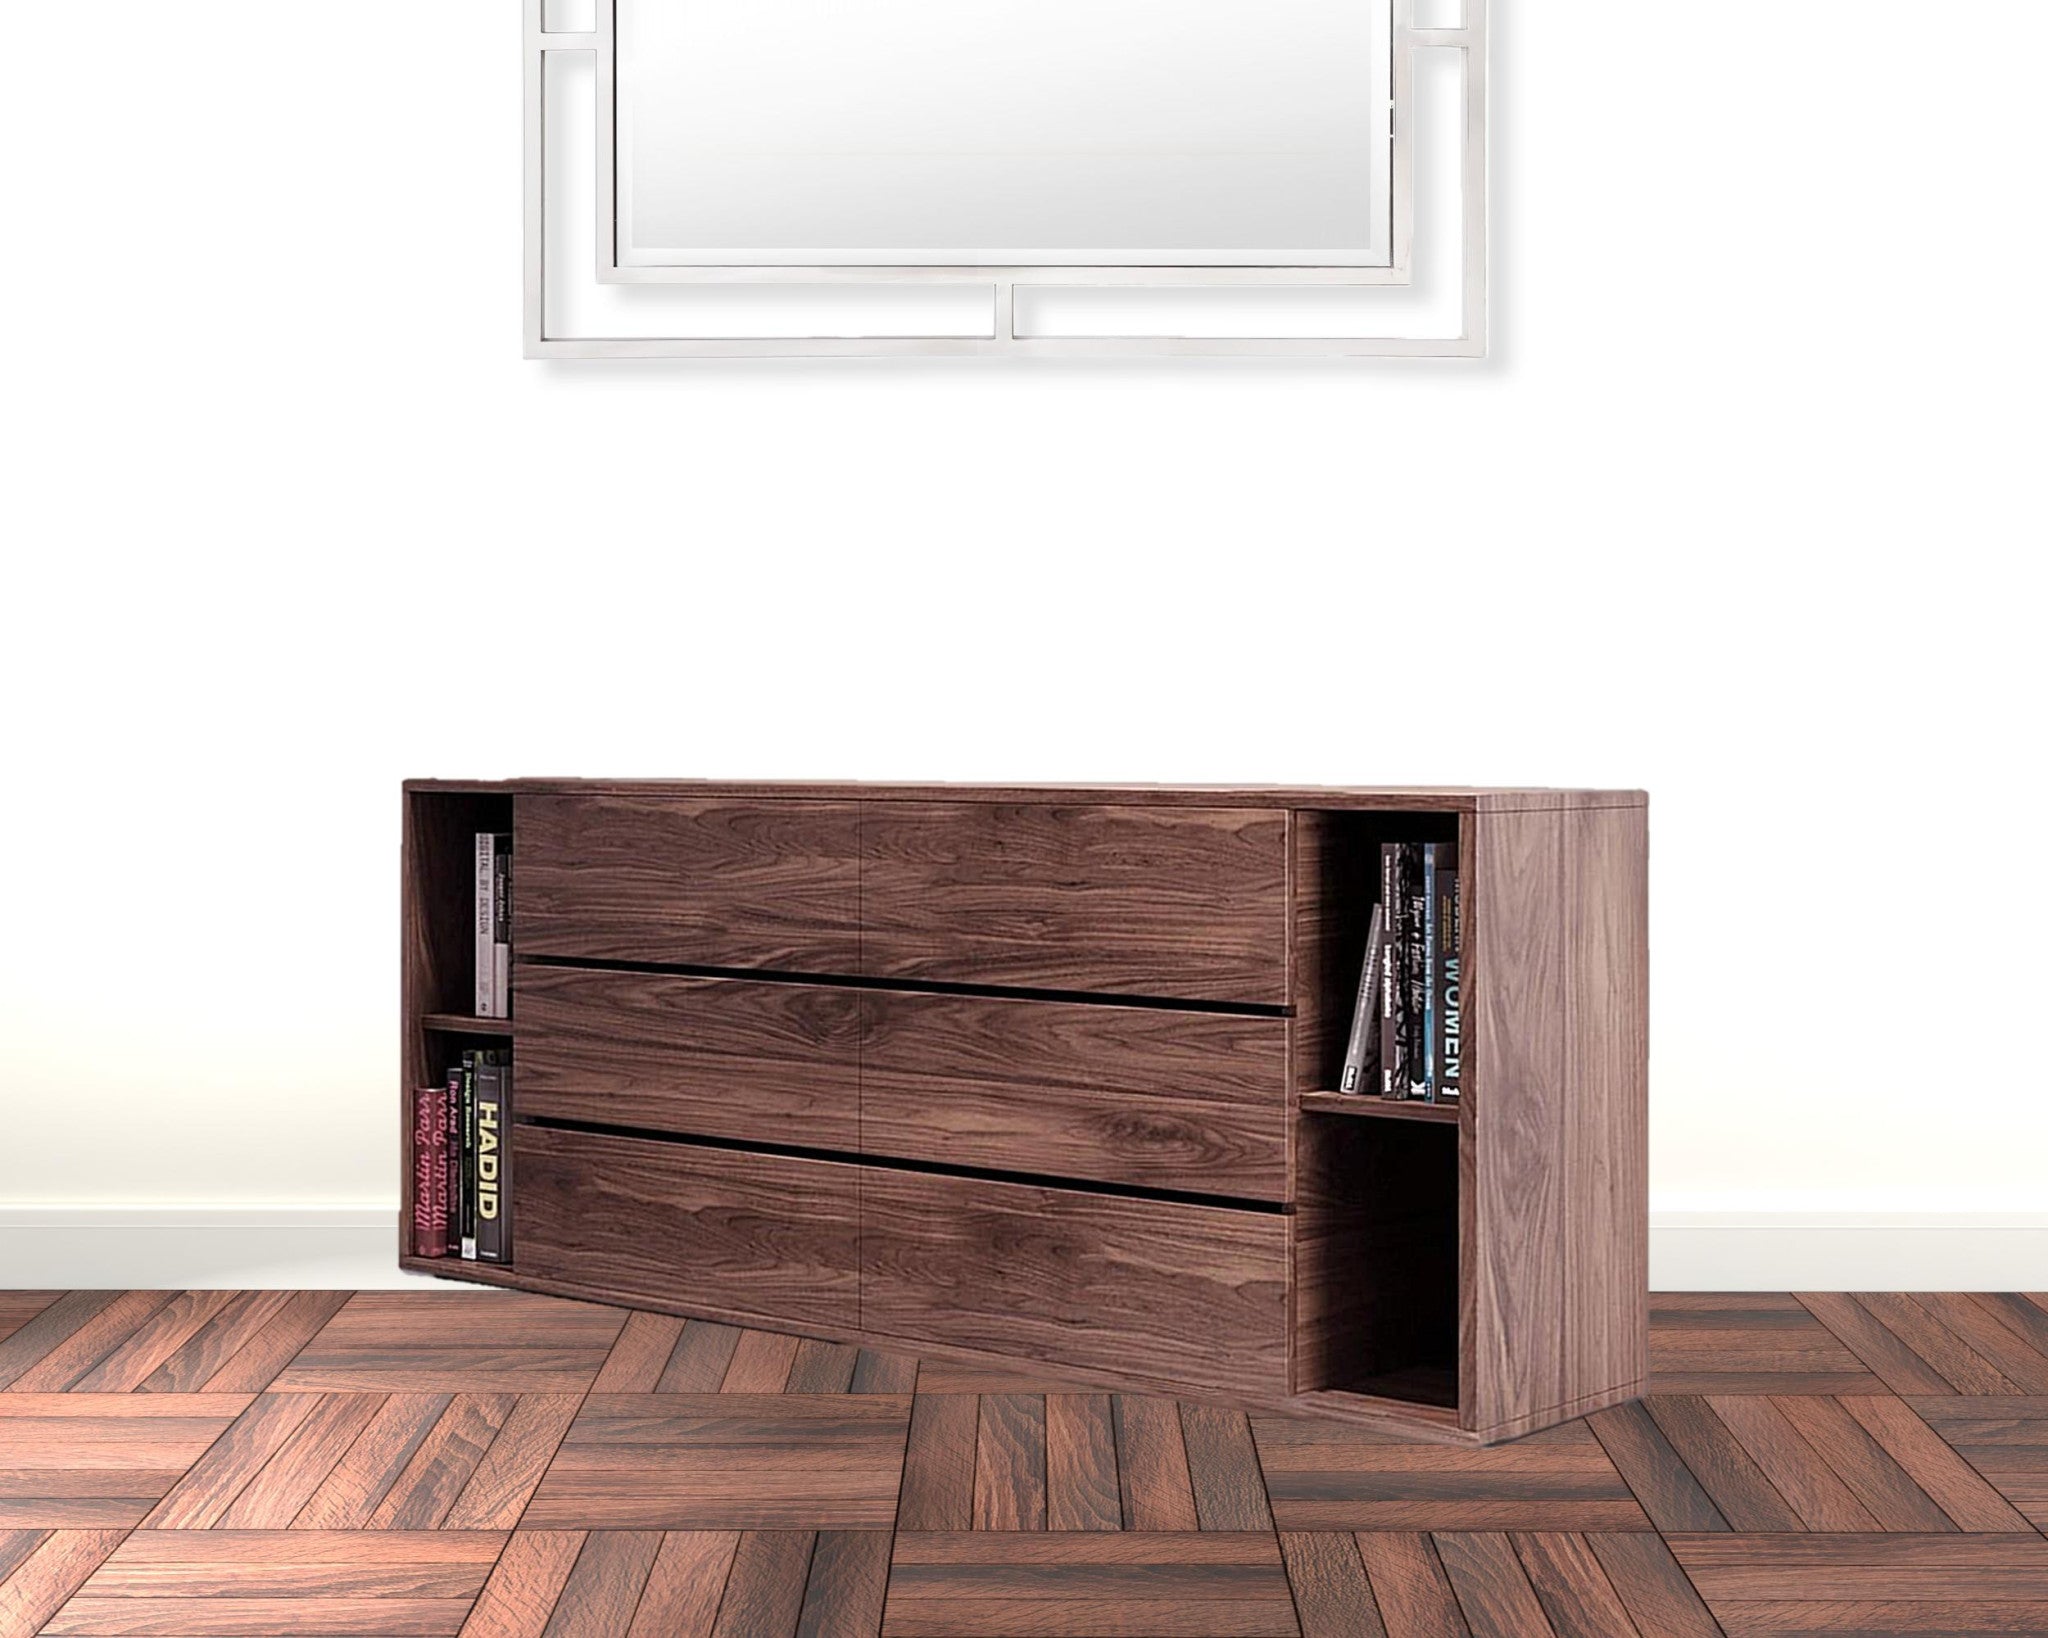 63" Walnut Solid Wood Six Drawer Double Dresser